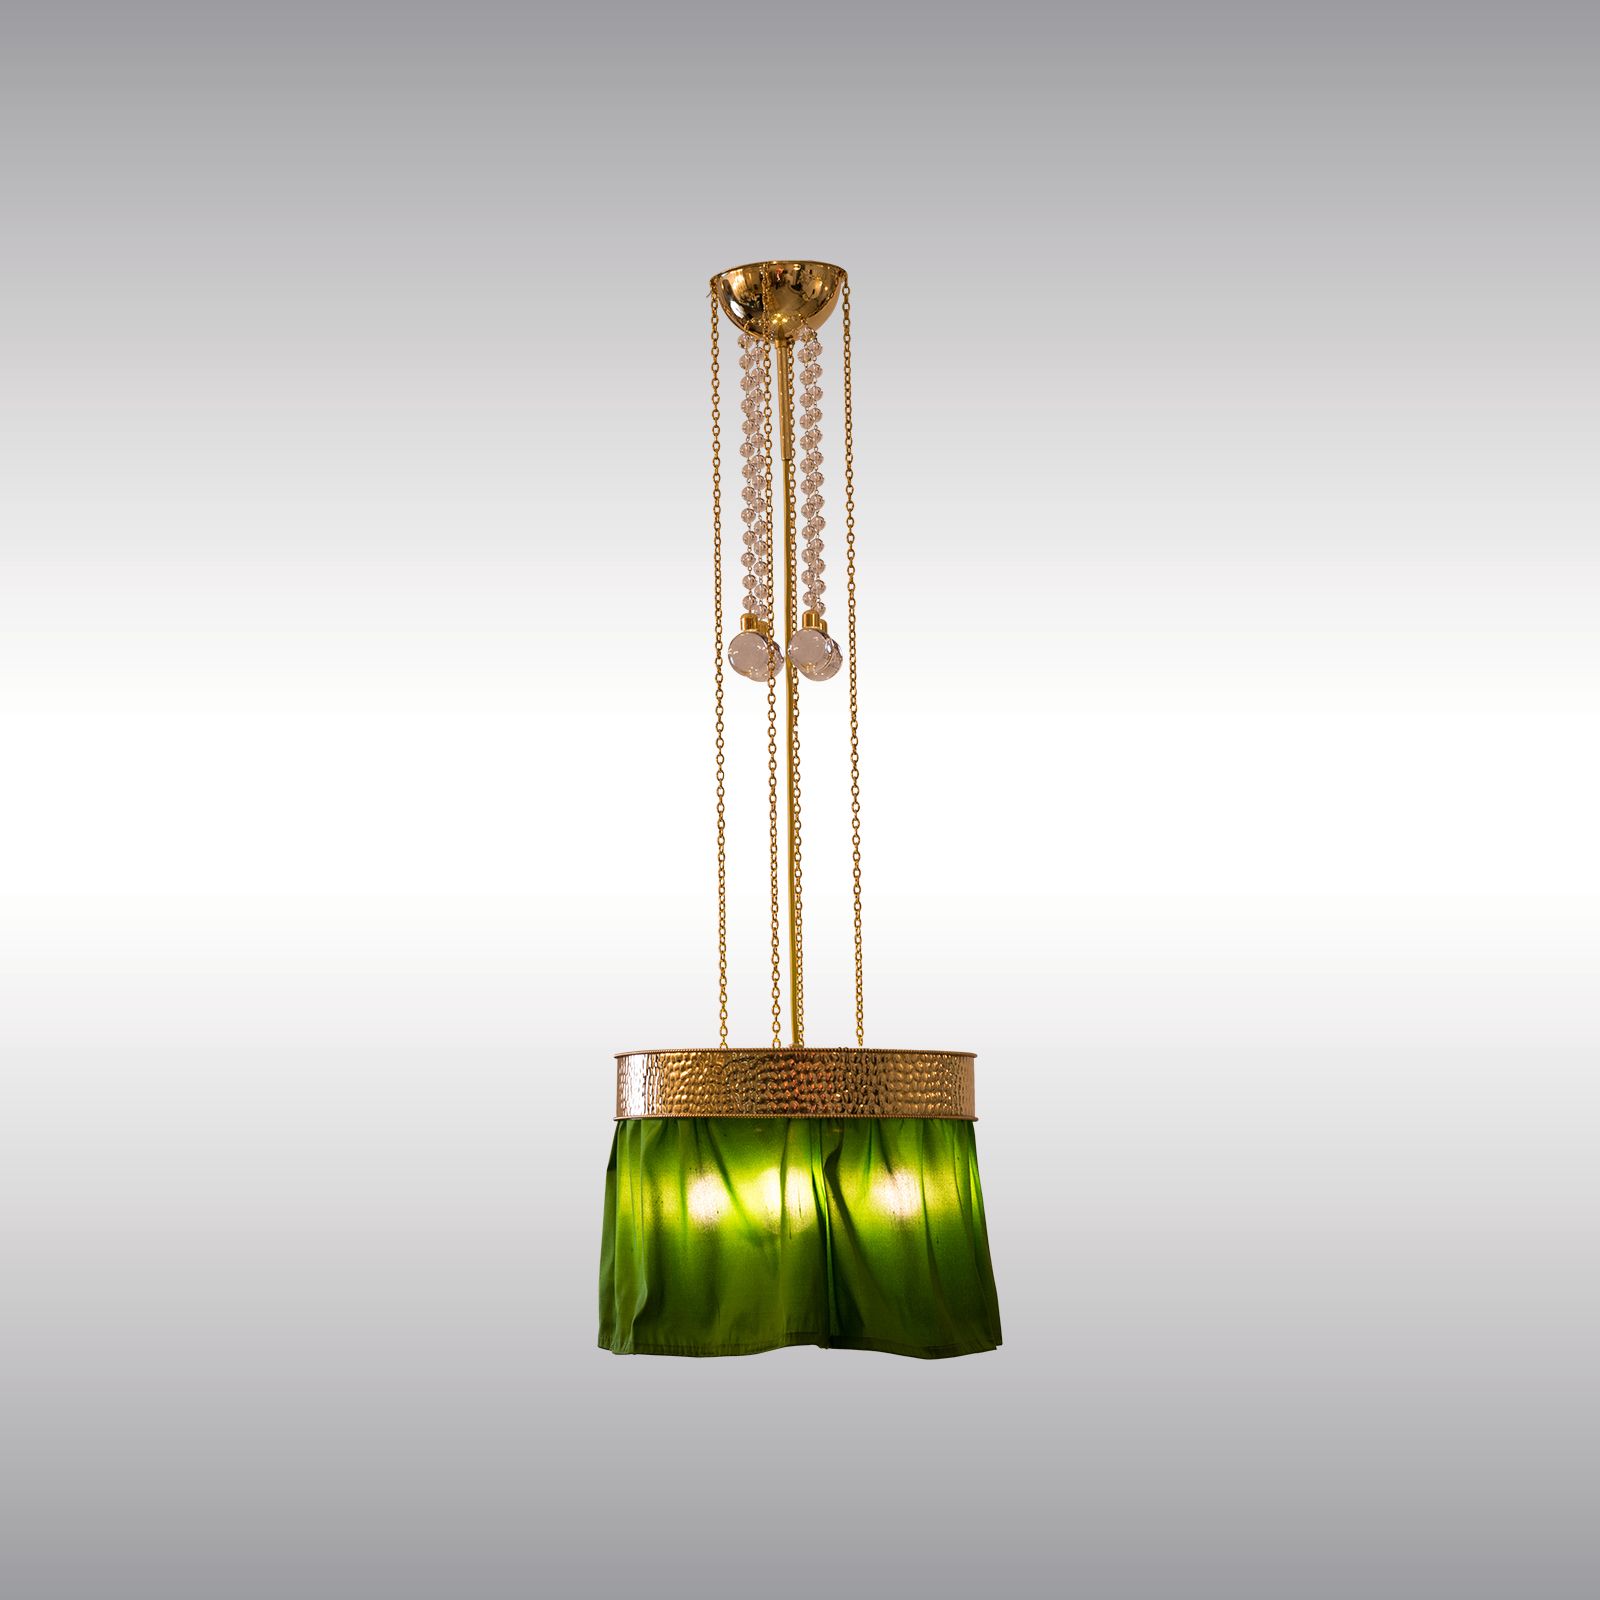 WOKA LAMPS VIENNA - OrderNr.: 22004|Josef Hoffmann Hanging Lamp - Design: Josef Hoffmann